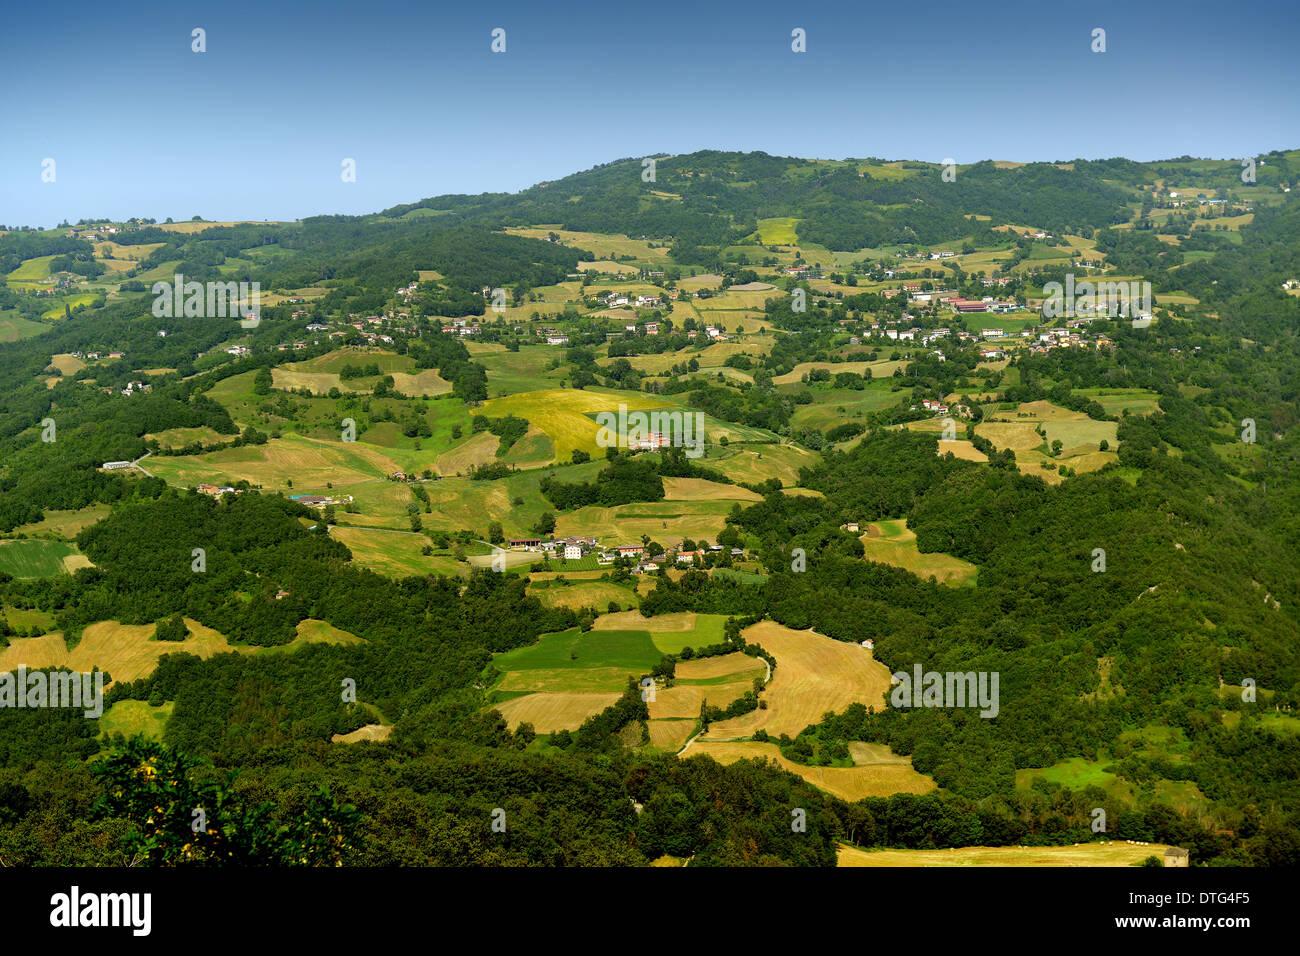 The valley of the Dragon - Modena Apennines West Reggio Emilia hills in the Italian region Emilia-Romagna  from Montefiorino Stock Photo